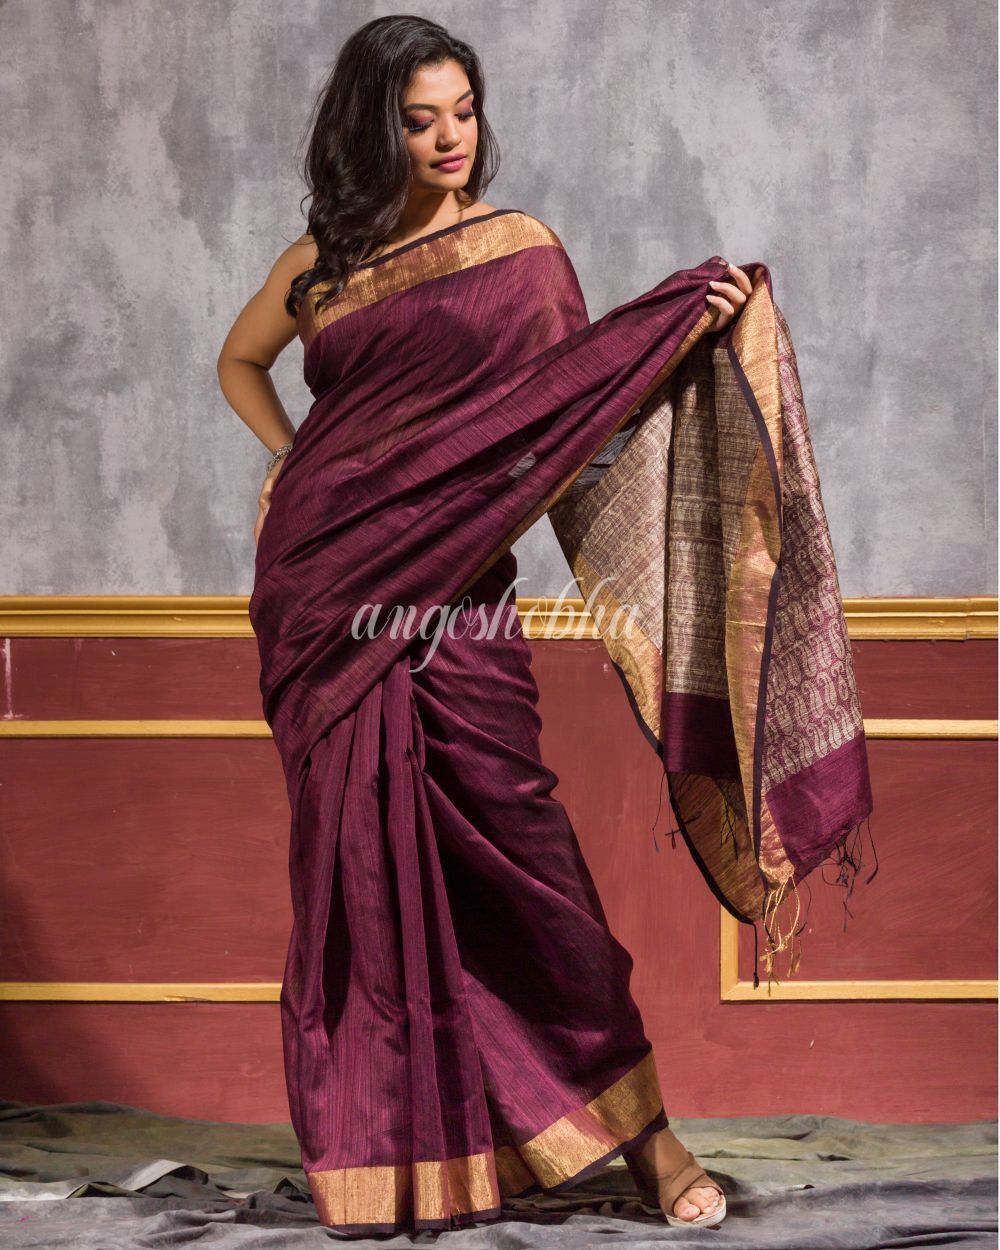 Women's Maroon Matka Silk Tangail Saree - Angoshobha